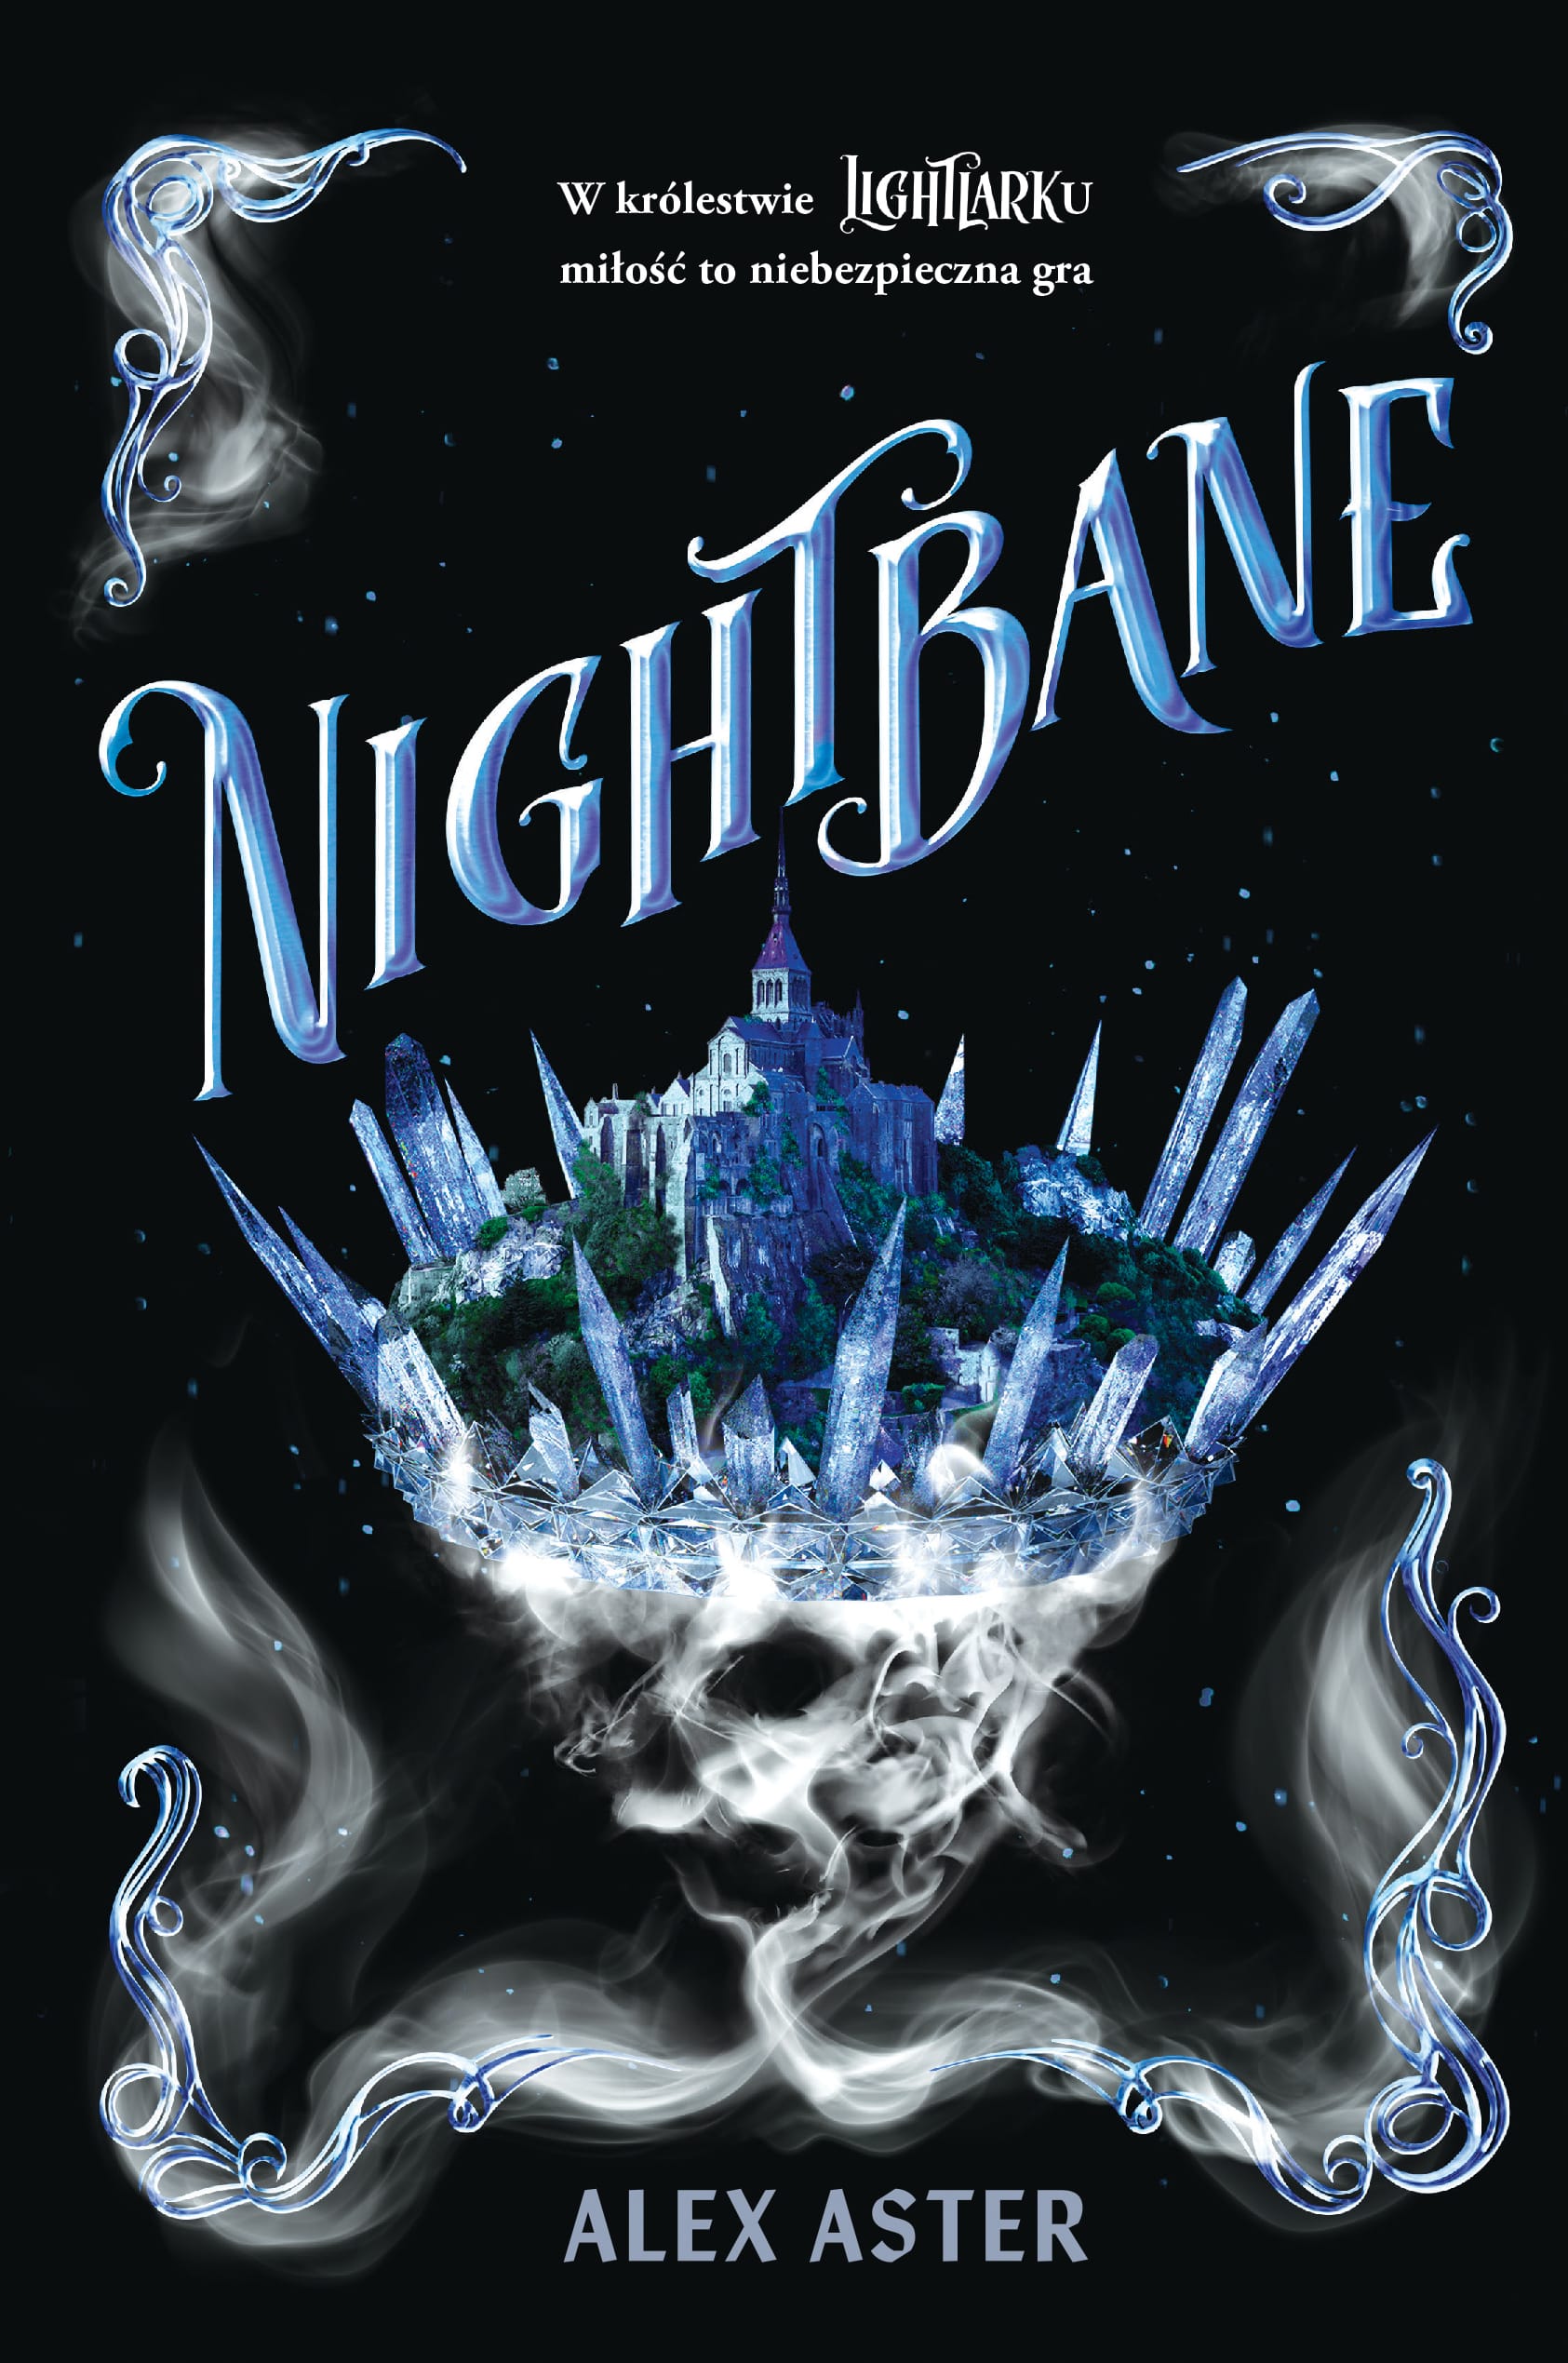 Nightbane - czas na drugi tom w serii Lightlark